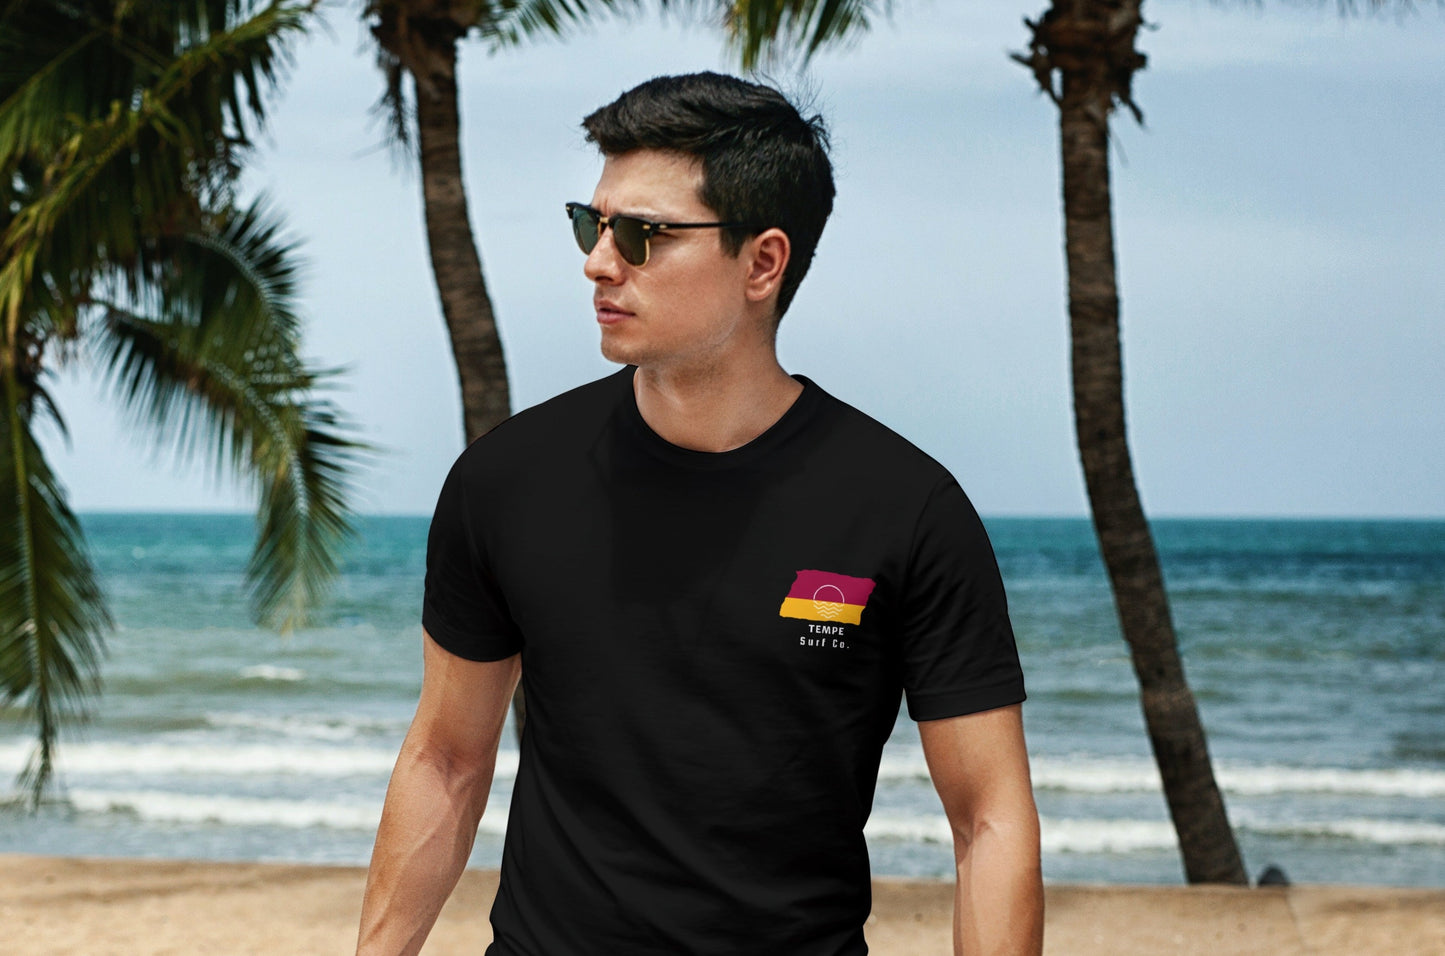 Tempe Surf Co. Black Surfboard Shirt